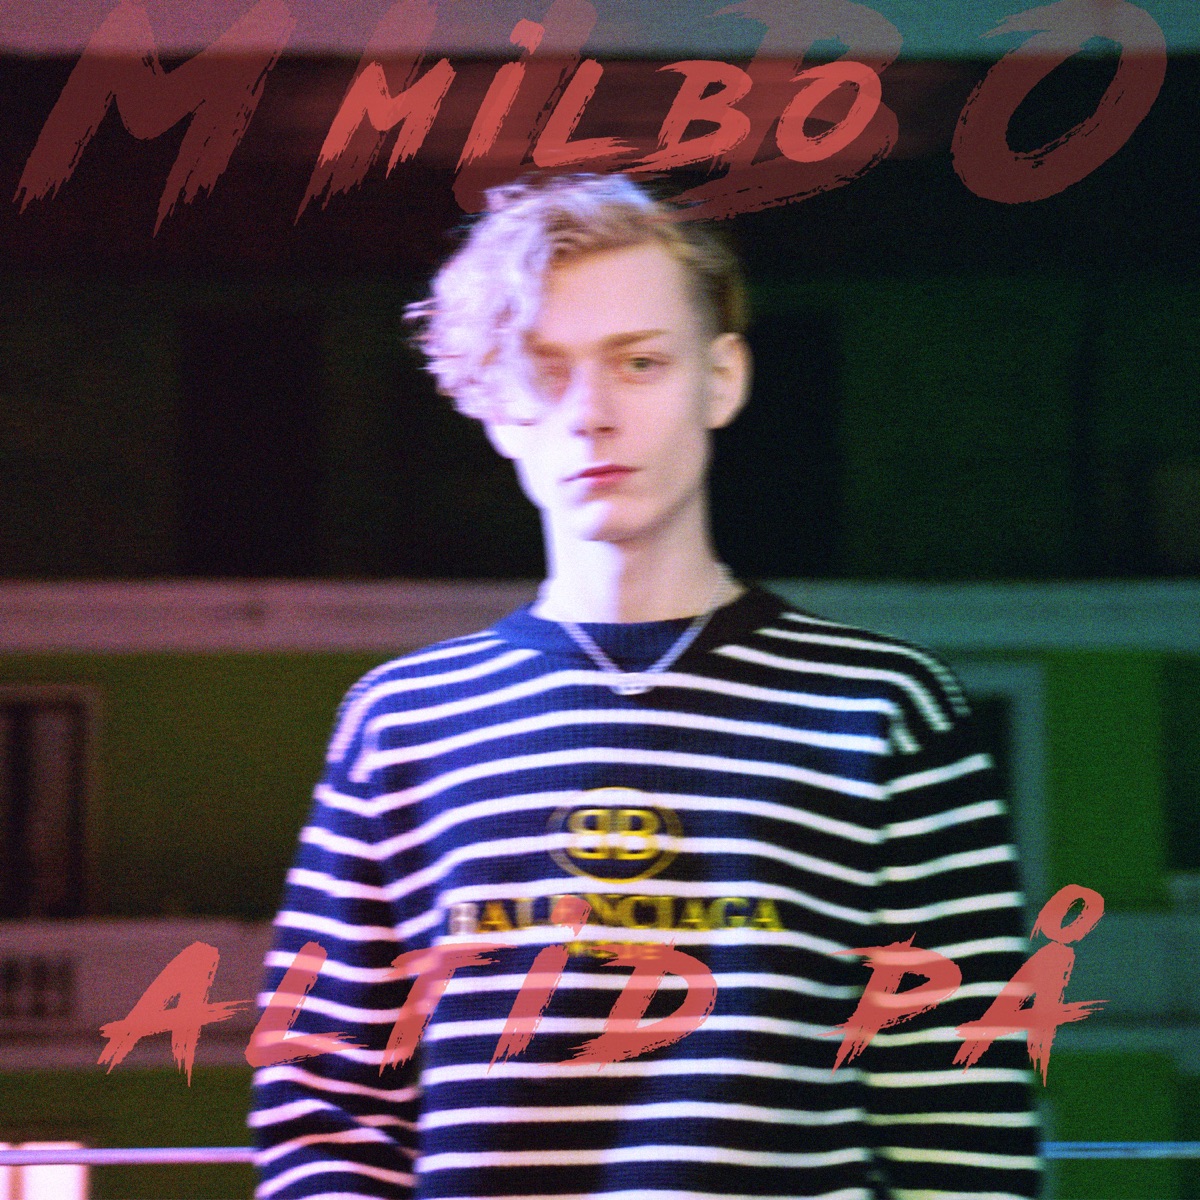 25 - by Milbo on Apple Music